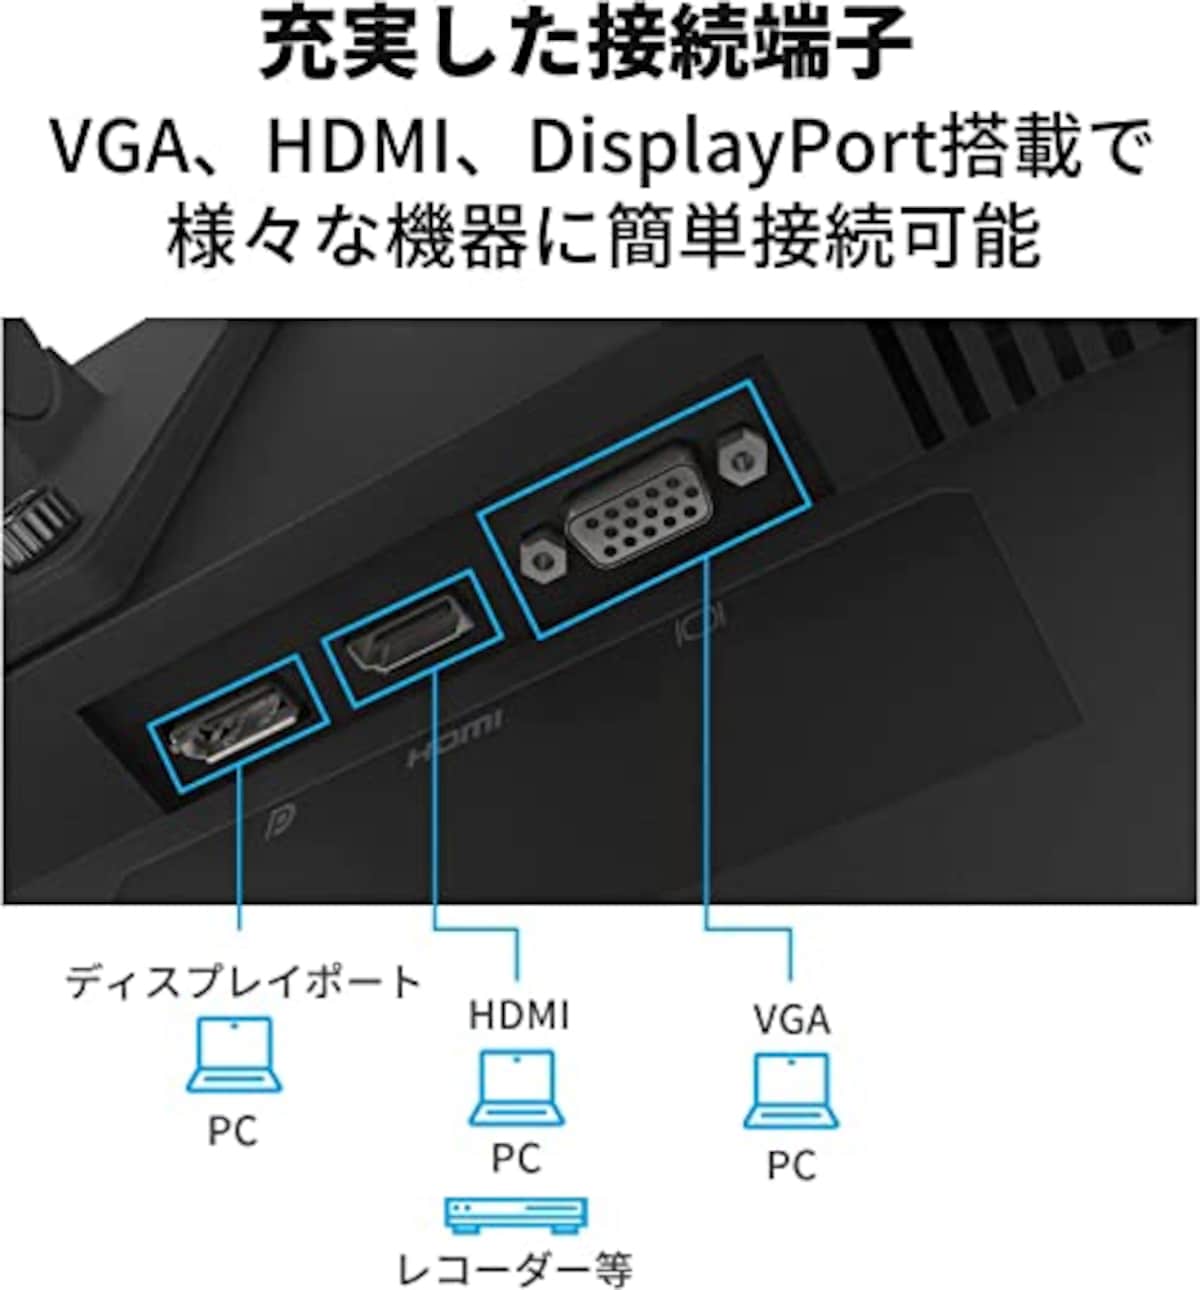  【Amazon.co.jp限定】Lenovo L24-28 モニター (23.8インチ IPS WLED液晶 FHD メーカー3年保証 スピーカー付 非光沢 高さ調整 角度調整 VESA HDMIケーブル付属) ブラック 66EBMAC4JP画像7 